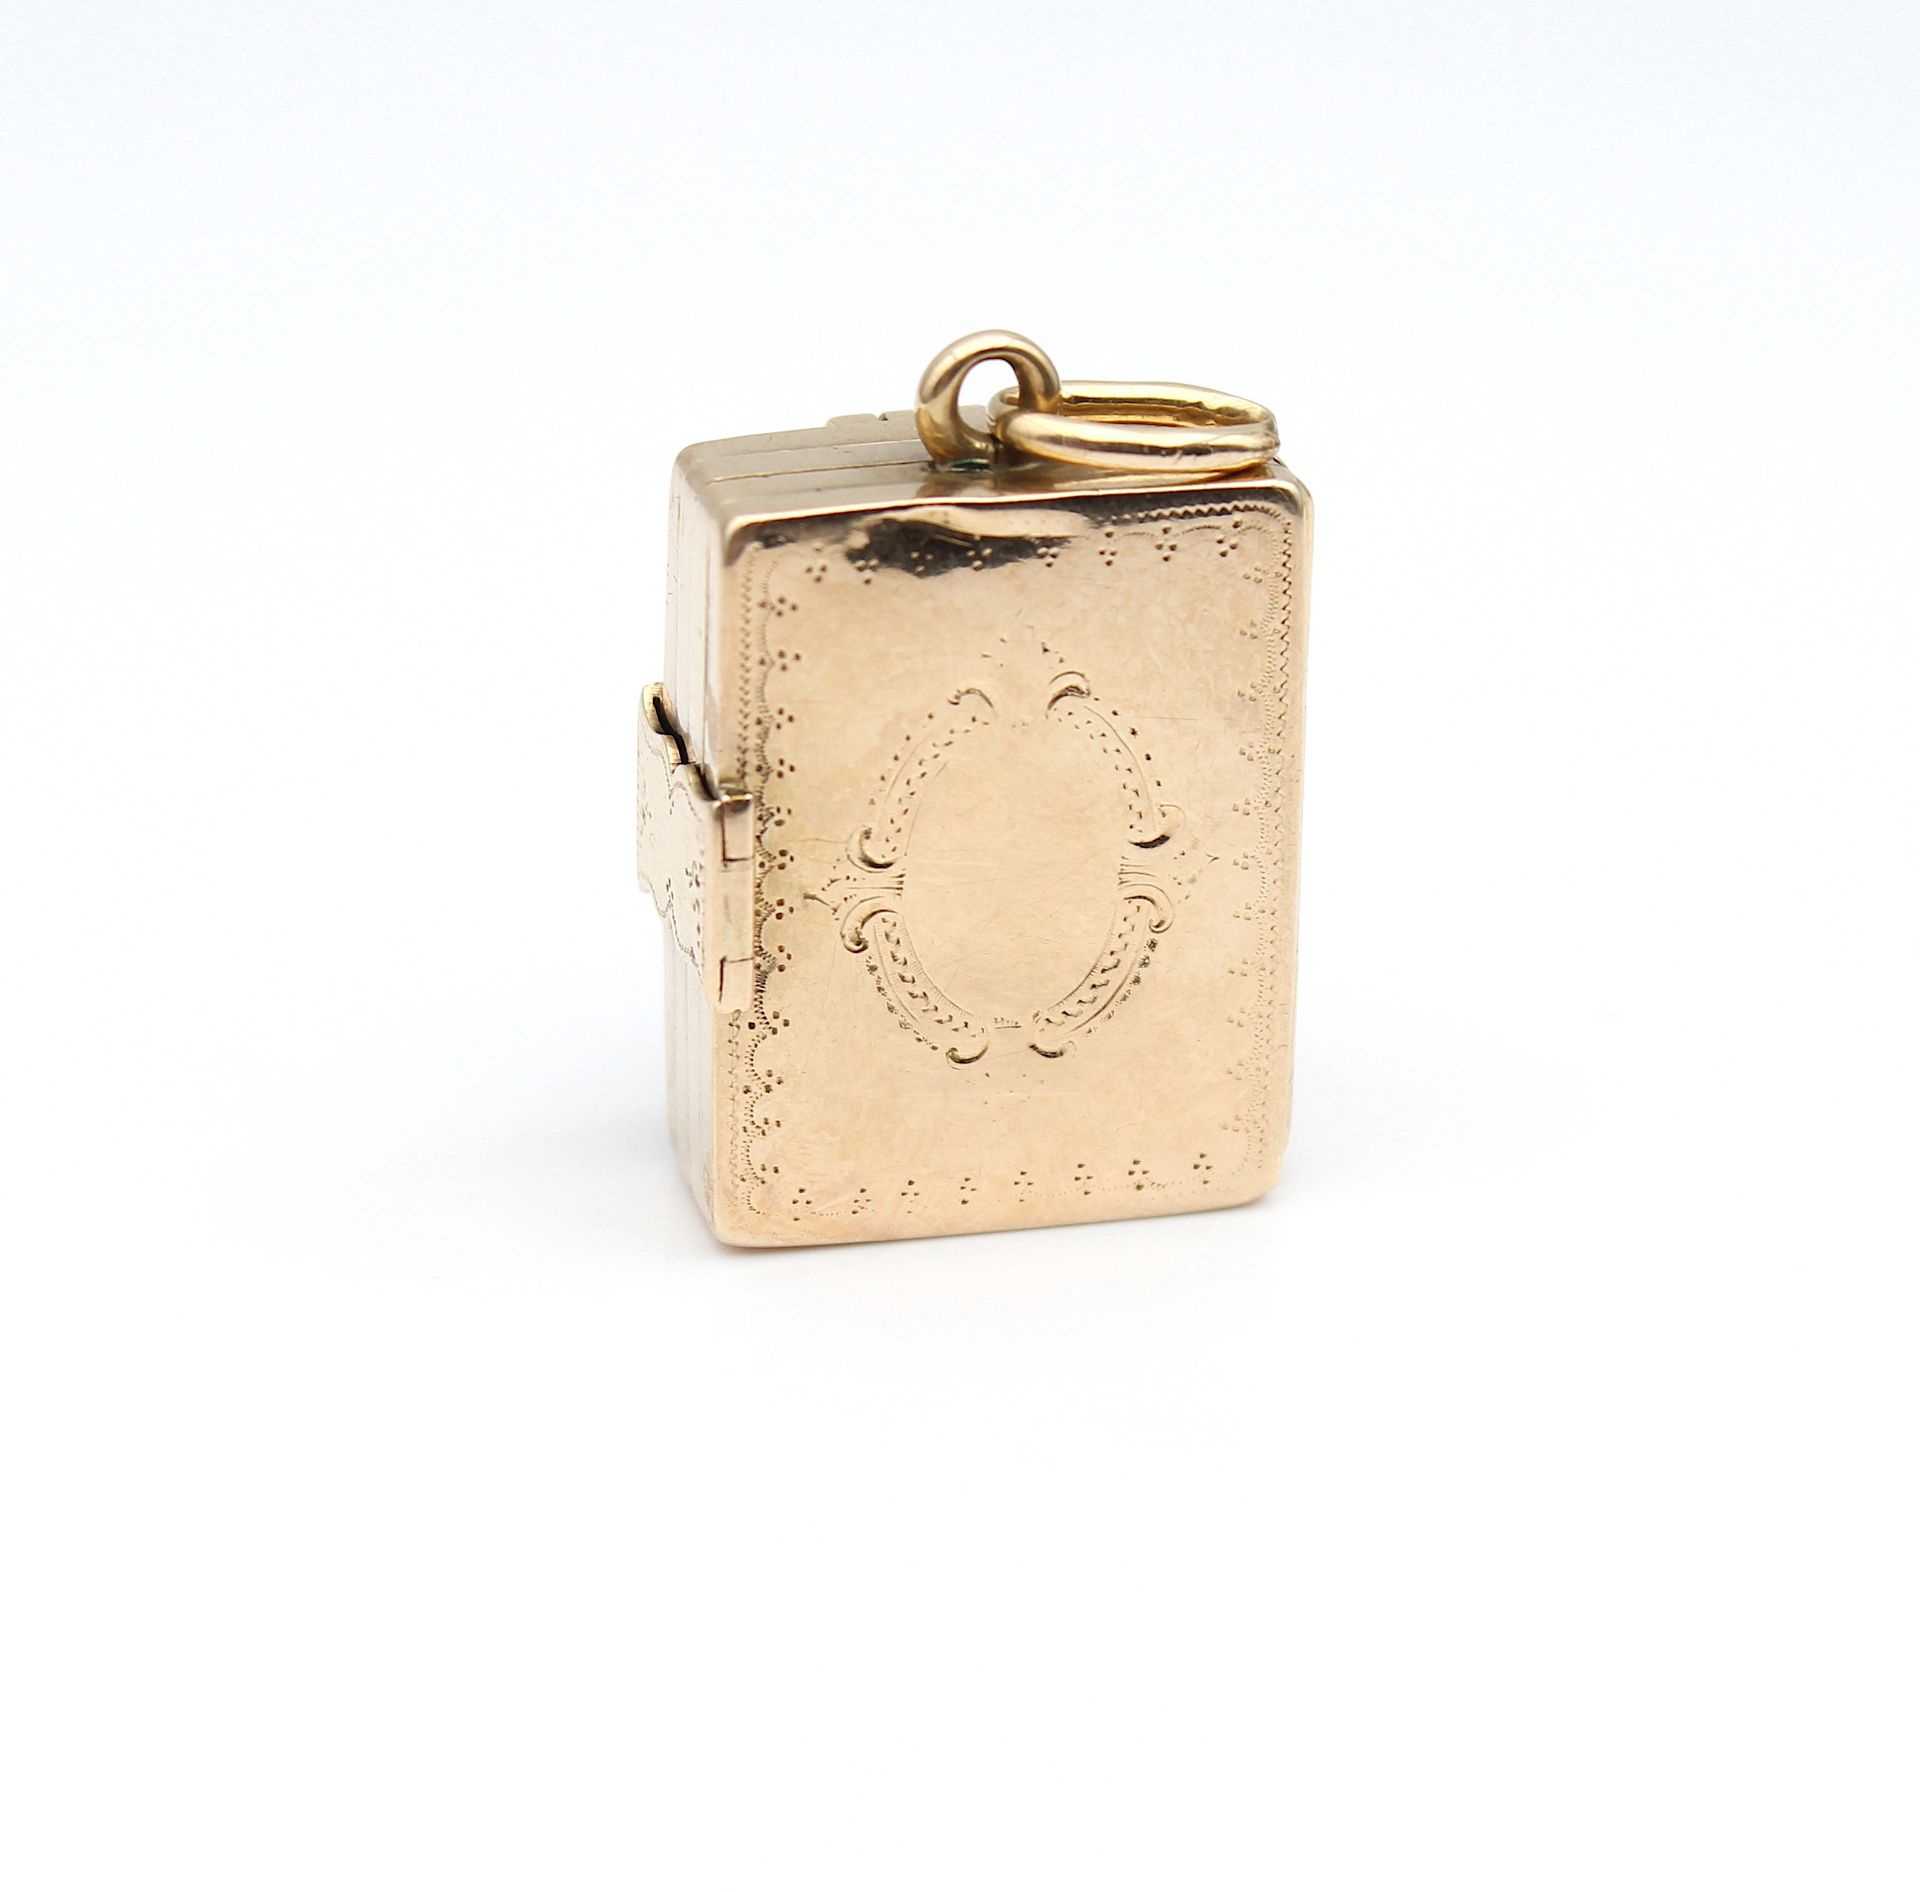 Interesting pendant / locket around 1900 - Image 3 of 6